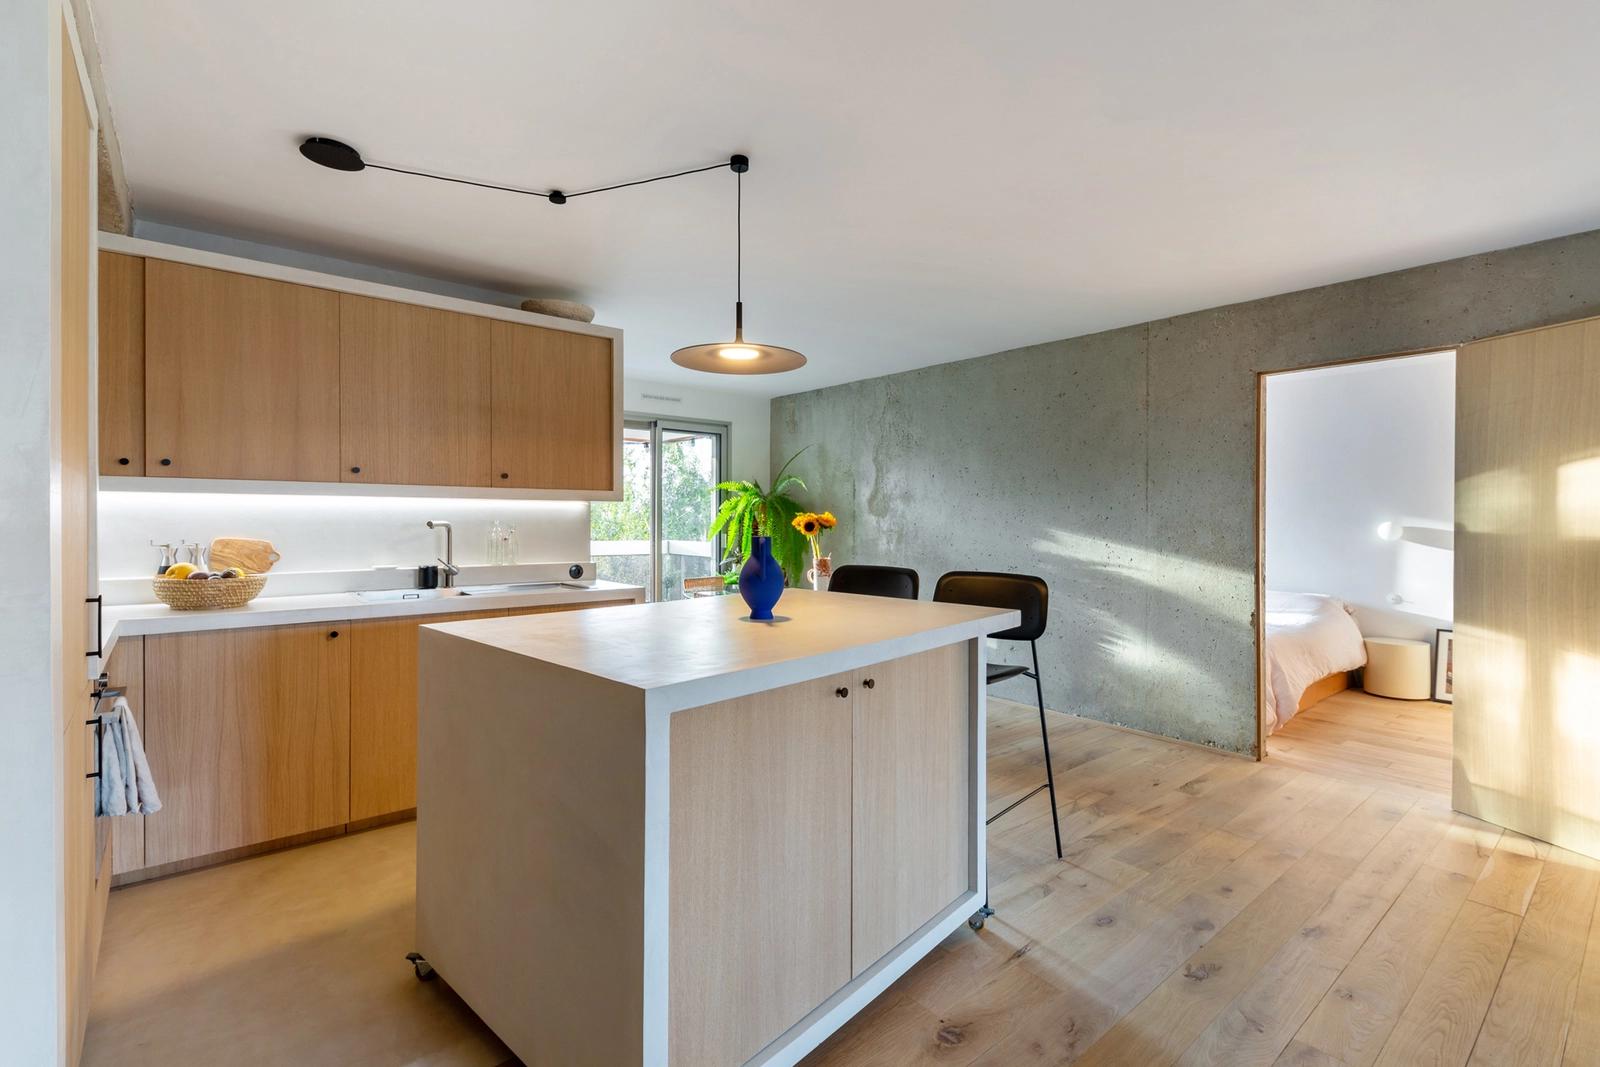 Kitchen dentro Piso moderno y minimalista - 5